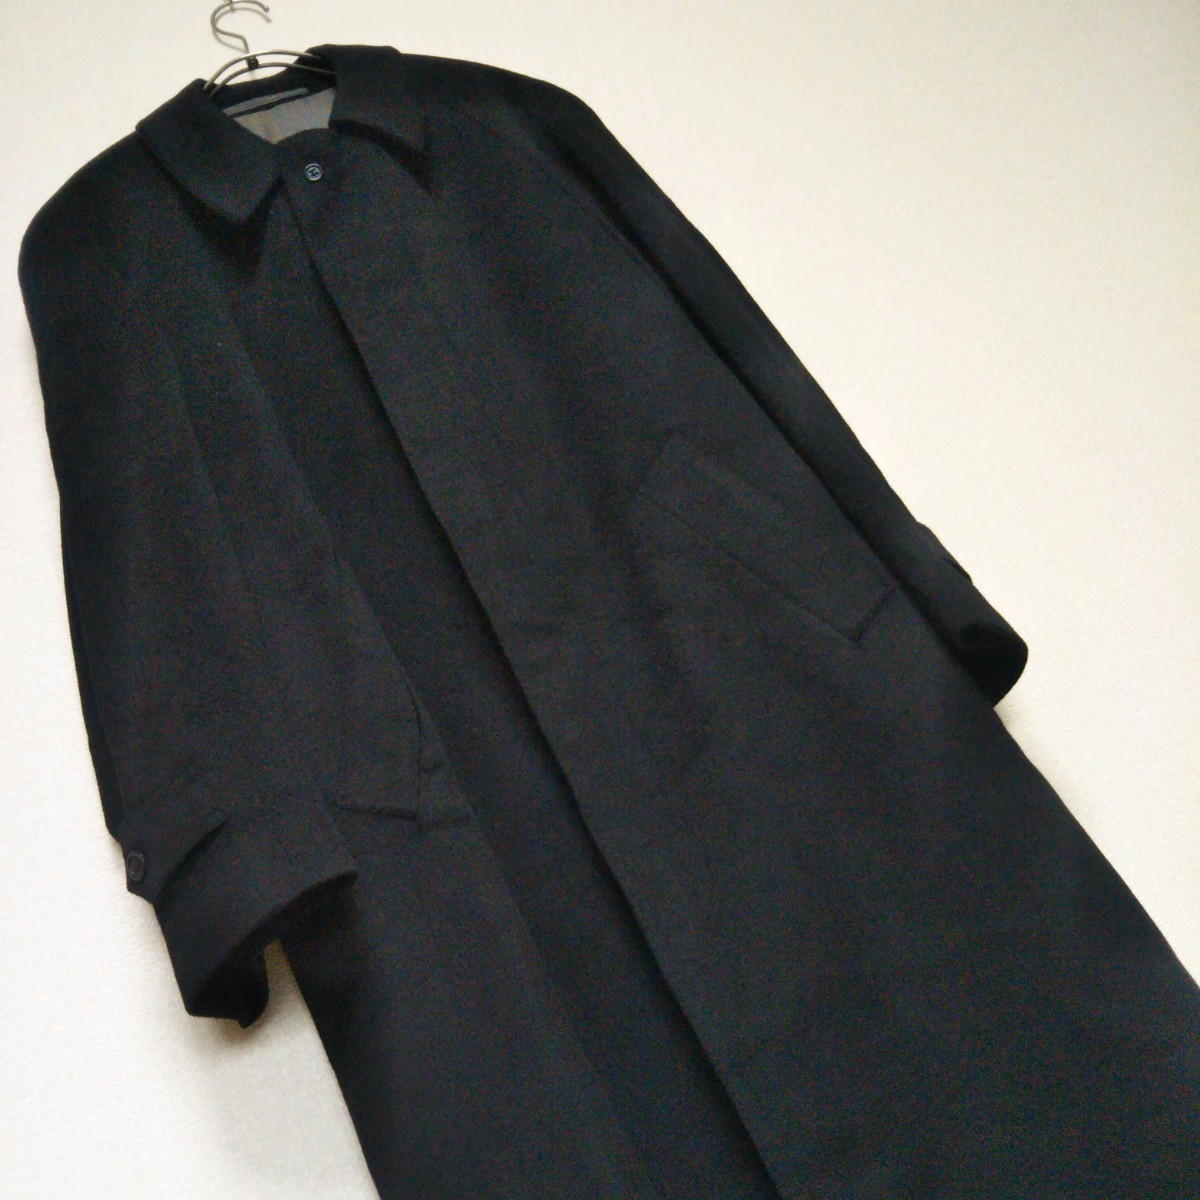 BIEBER コロンボ メンズ 黒 ブラック ステンカラーコート ロングコート アウター ジャケット 上着 カシミヤ100% 高級 高品質 ビジネス/J4